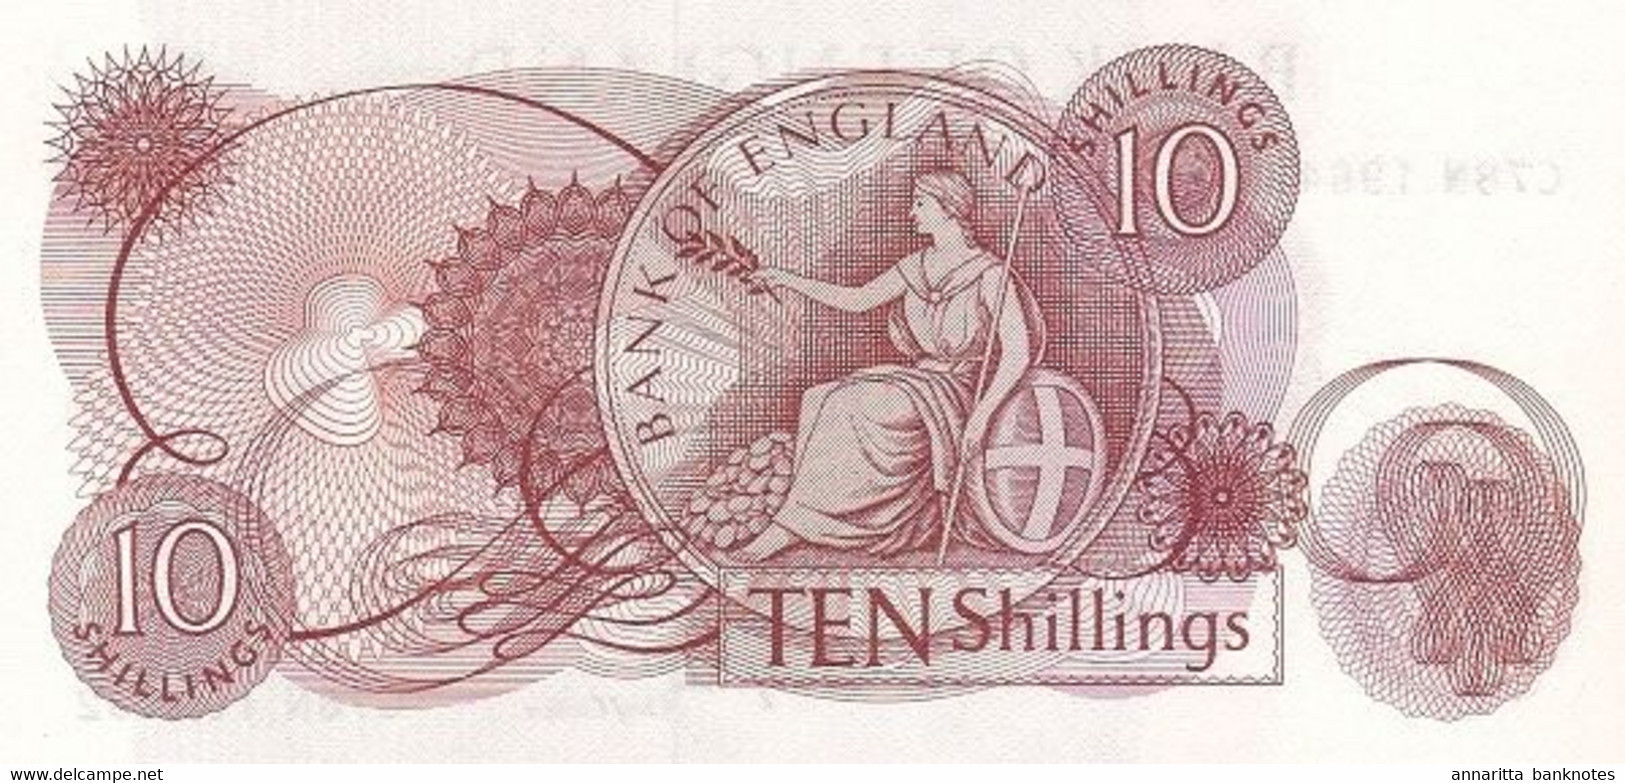 Great Britain (BOE) 10 Shillings ND (1970) UNC Cat No. P-373c / GB373c - 10 Shillings